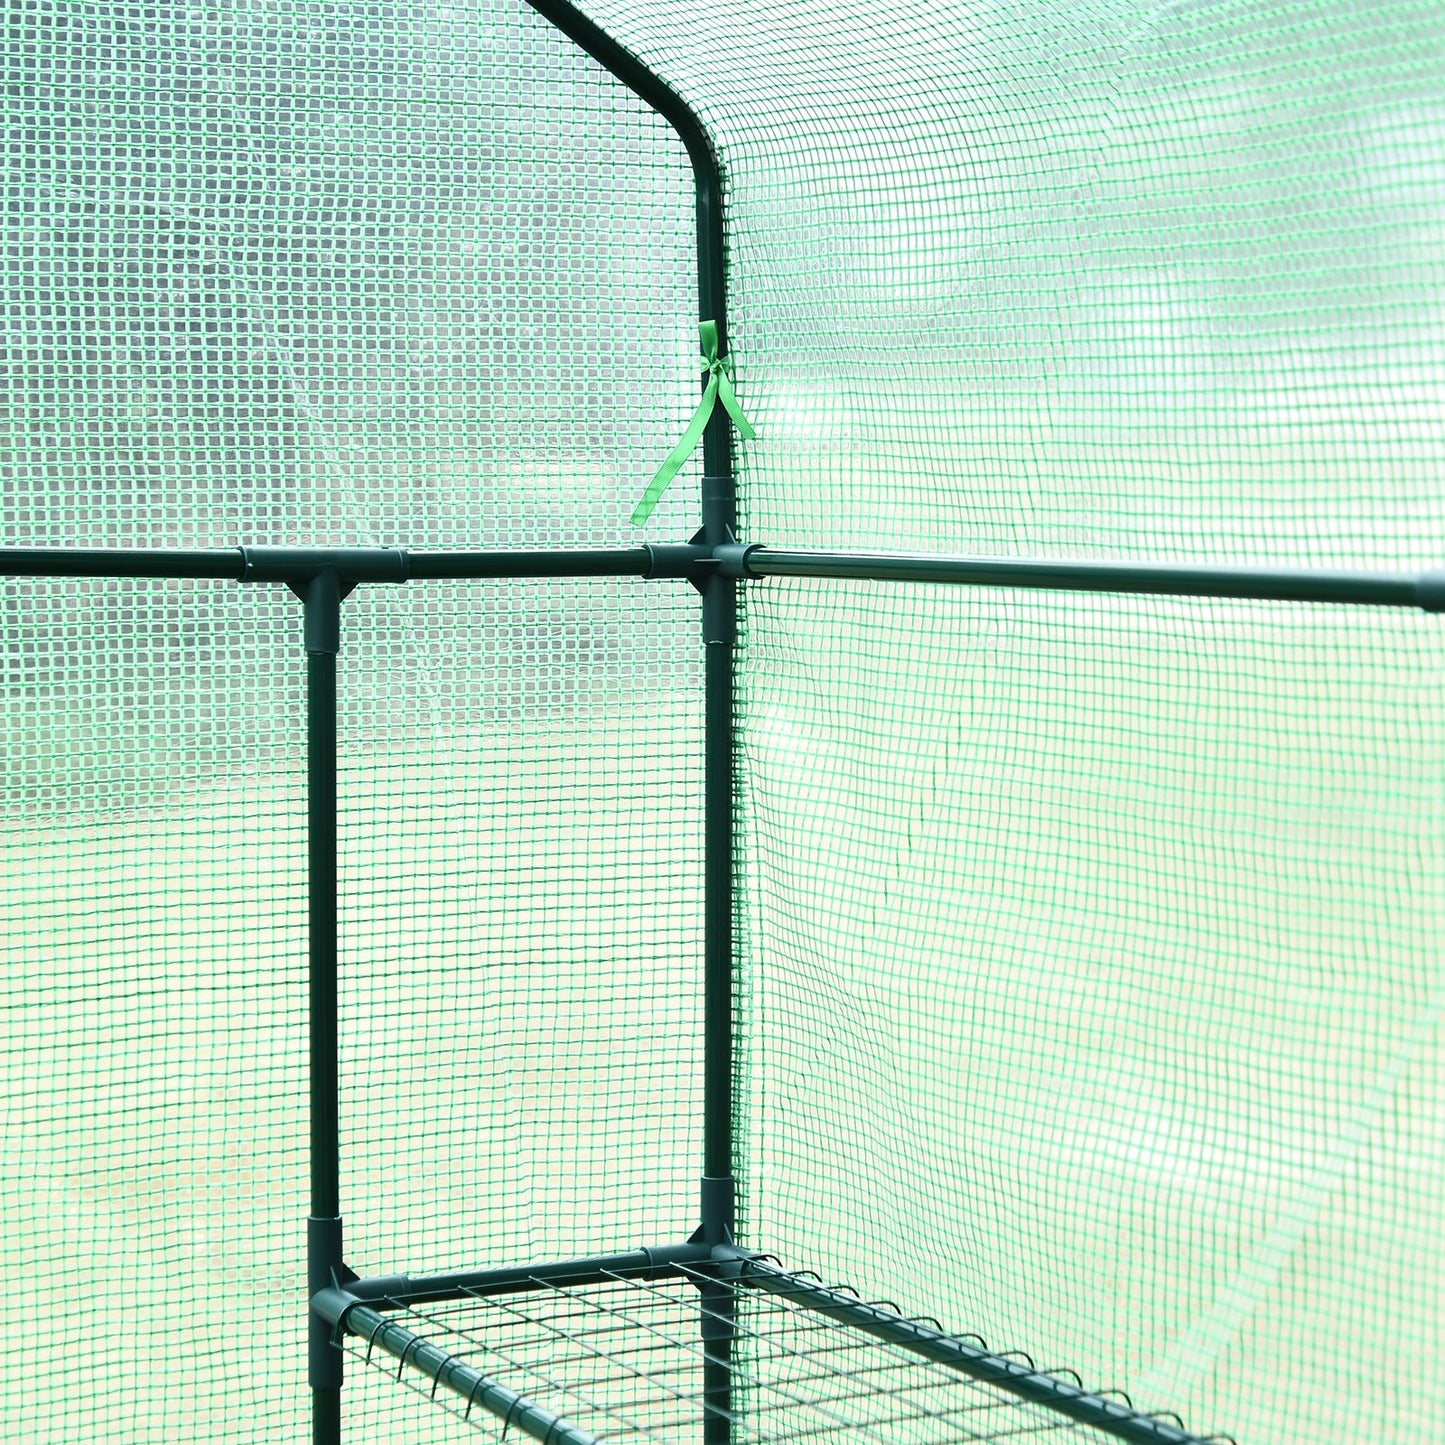 Outsunny 143x143x195 cm Walk in Greenhouse W/ Shelves-Dark Green